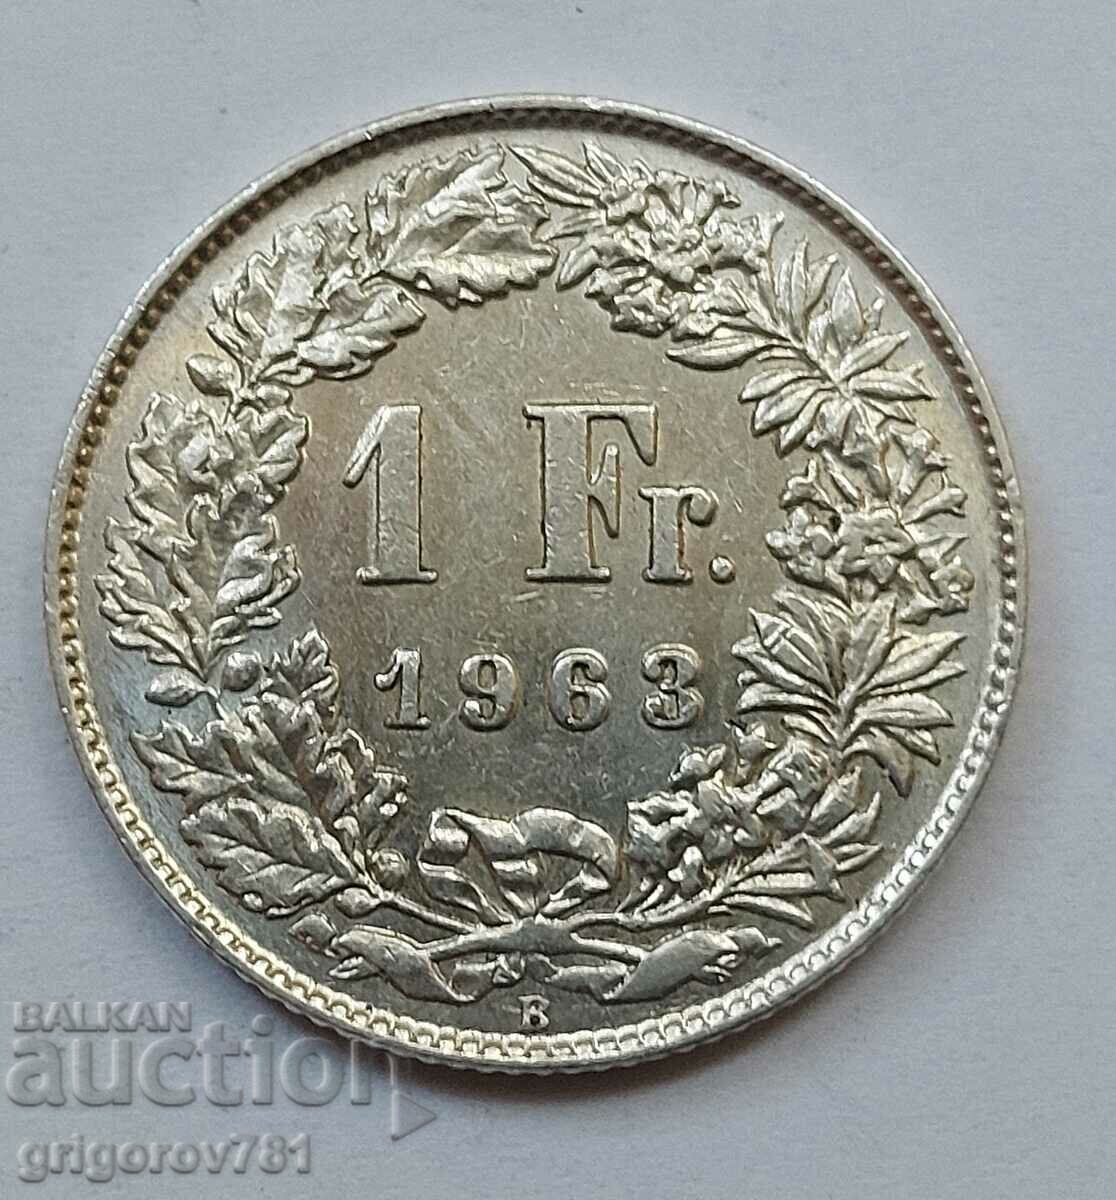 1 Franc Silver Switzerland 1963 B - Silver Coin #7